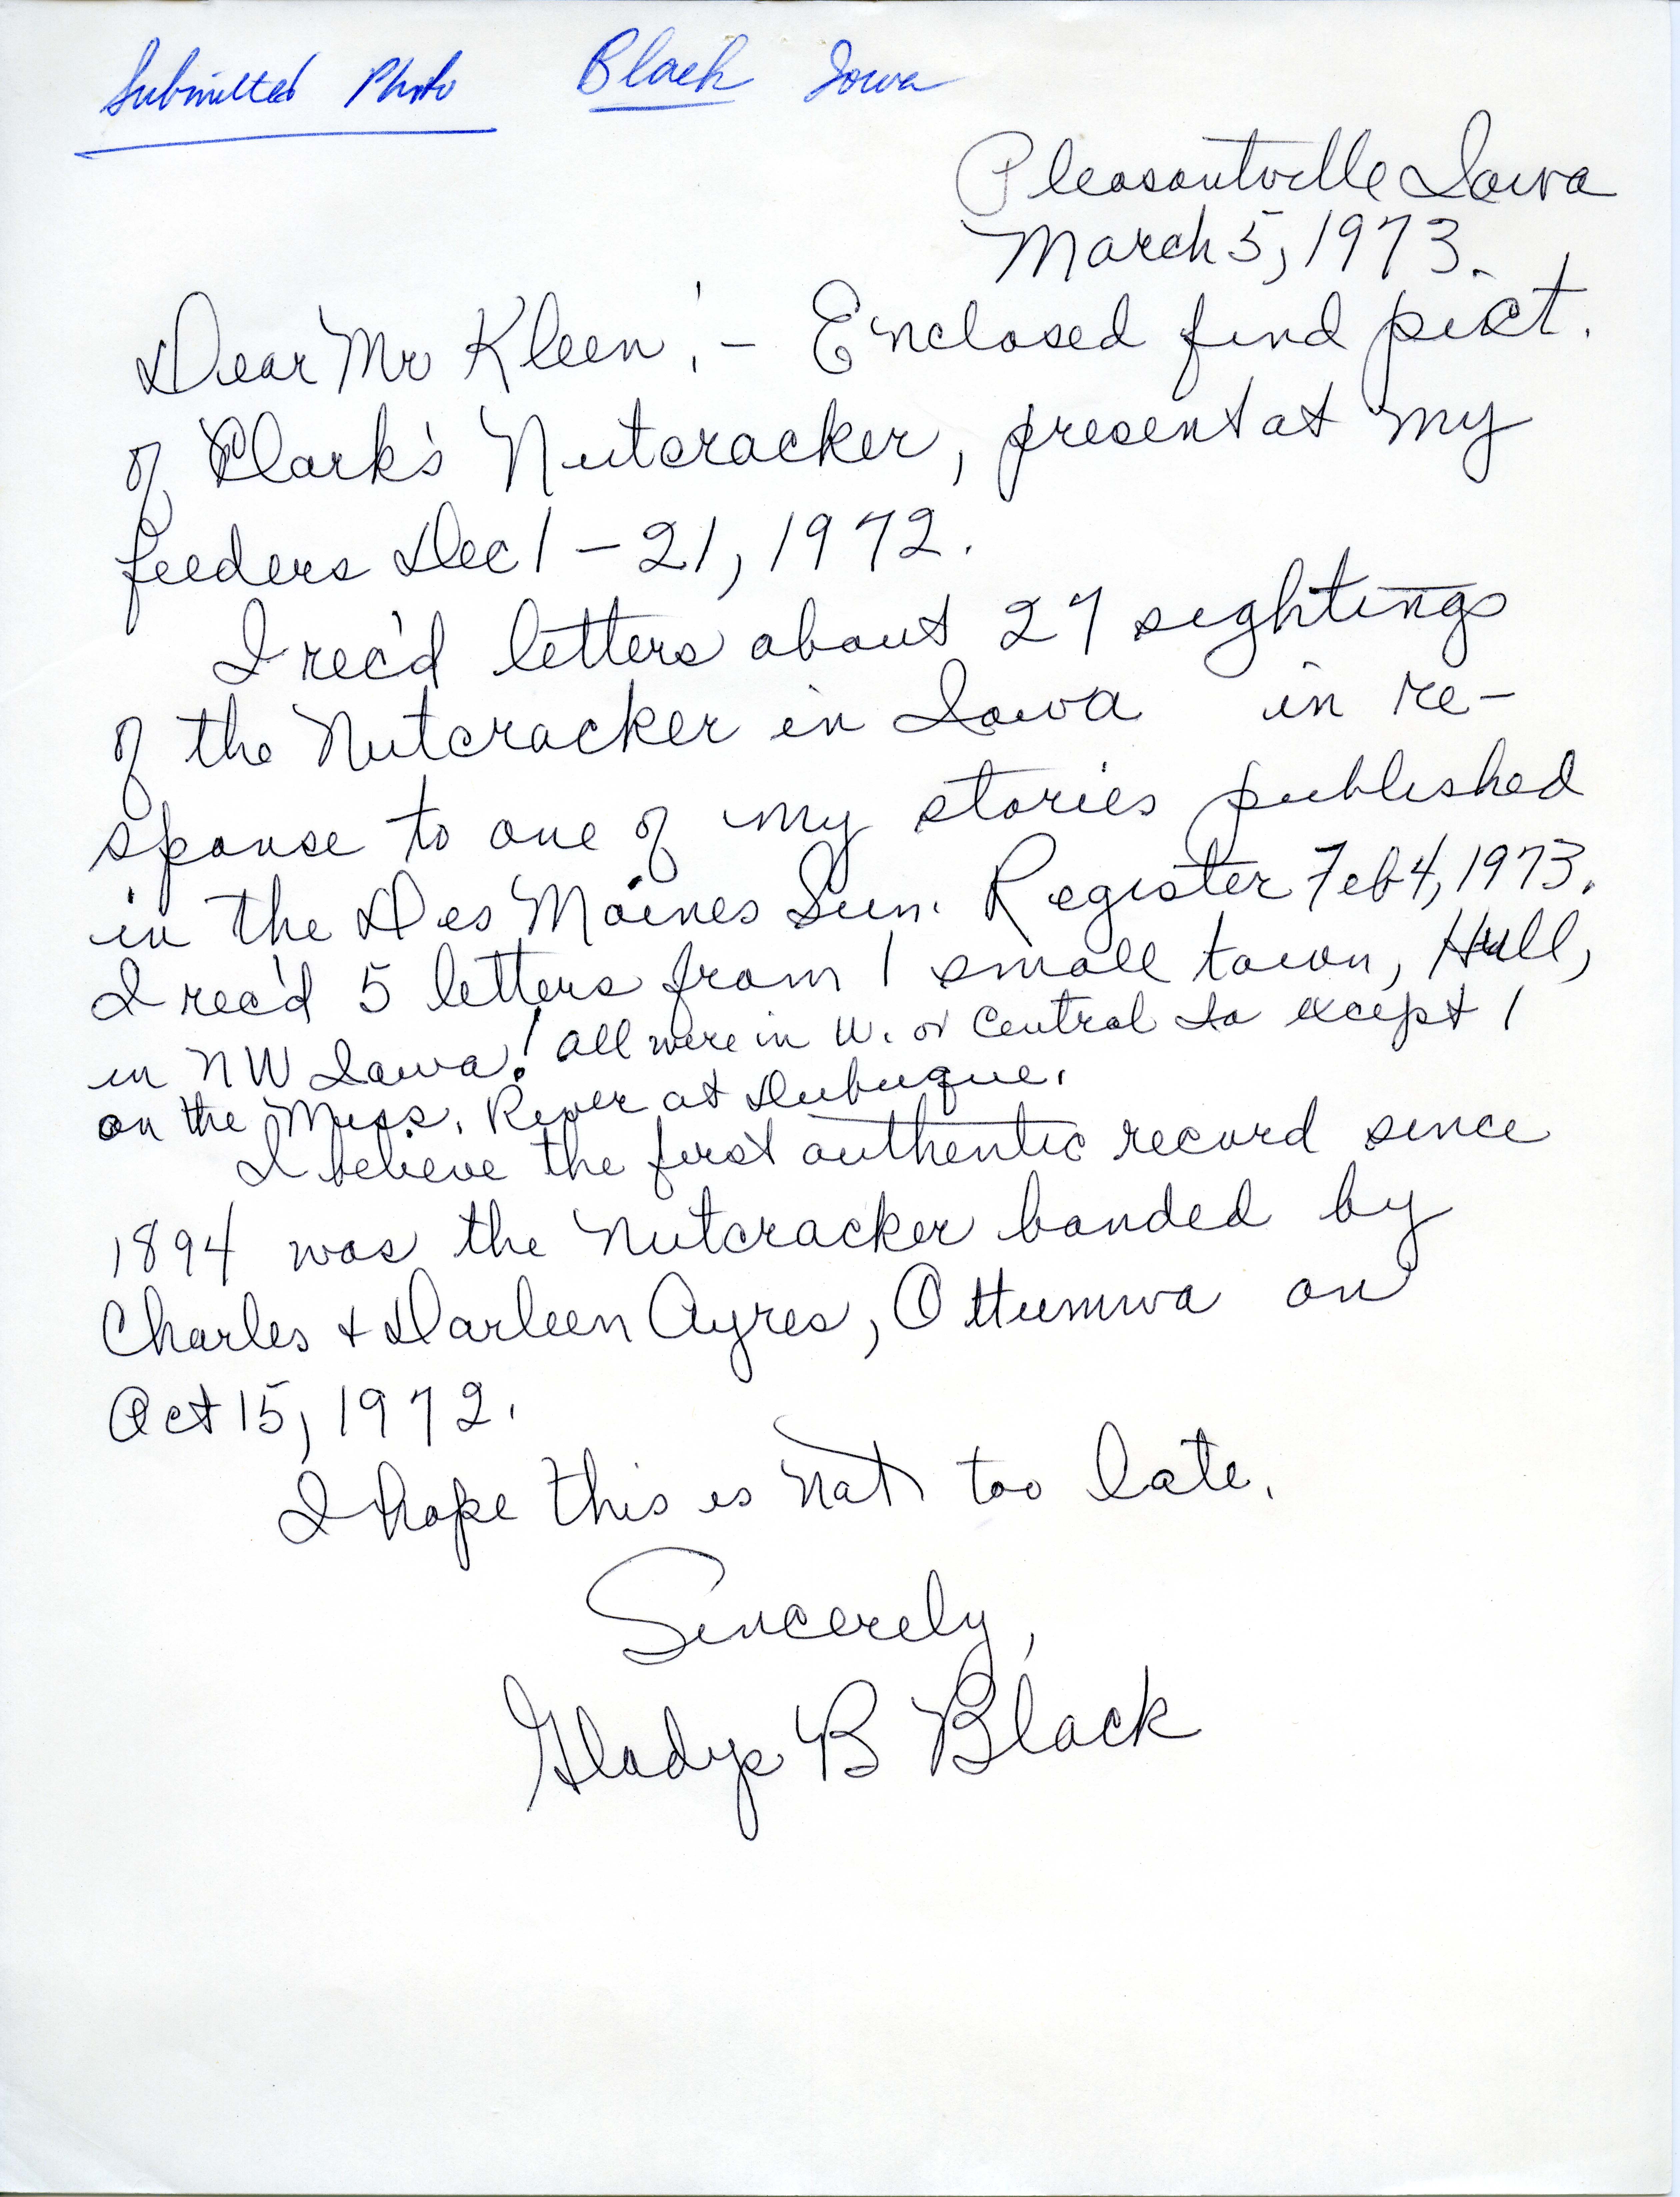 Gladys Black letter to Vernon M. Kleen regarding her sighting of Clark's Nutcracker, March 5, 1973